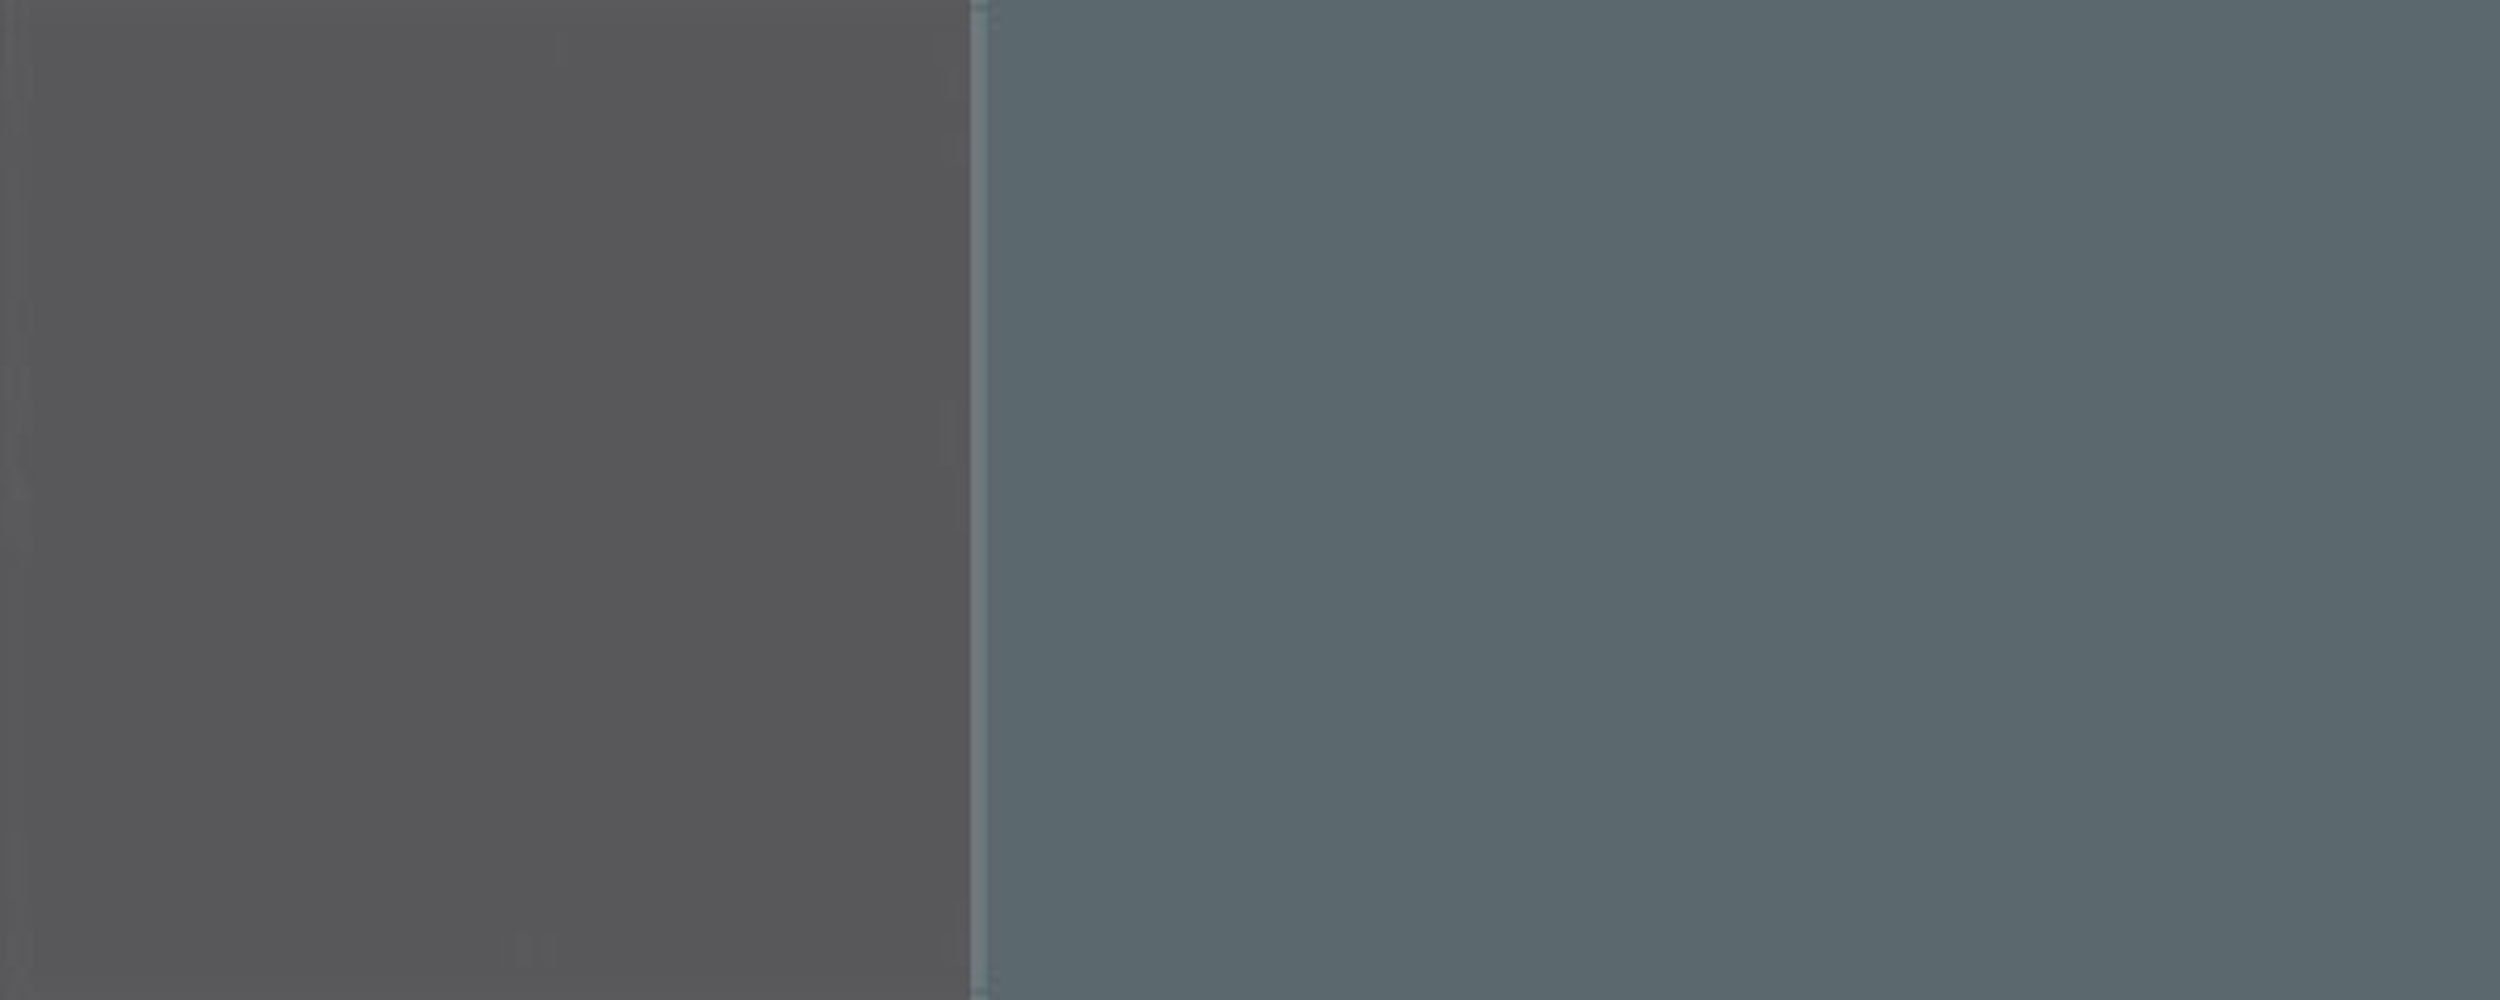 Feldmann-Wohnen RAL (Florence) Ausführung 2-türig Hochglanz 7031 60cm Florence blaugrau Front-, und wählbar Kühlumbauschrank grifflos Korpusfarbe